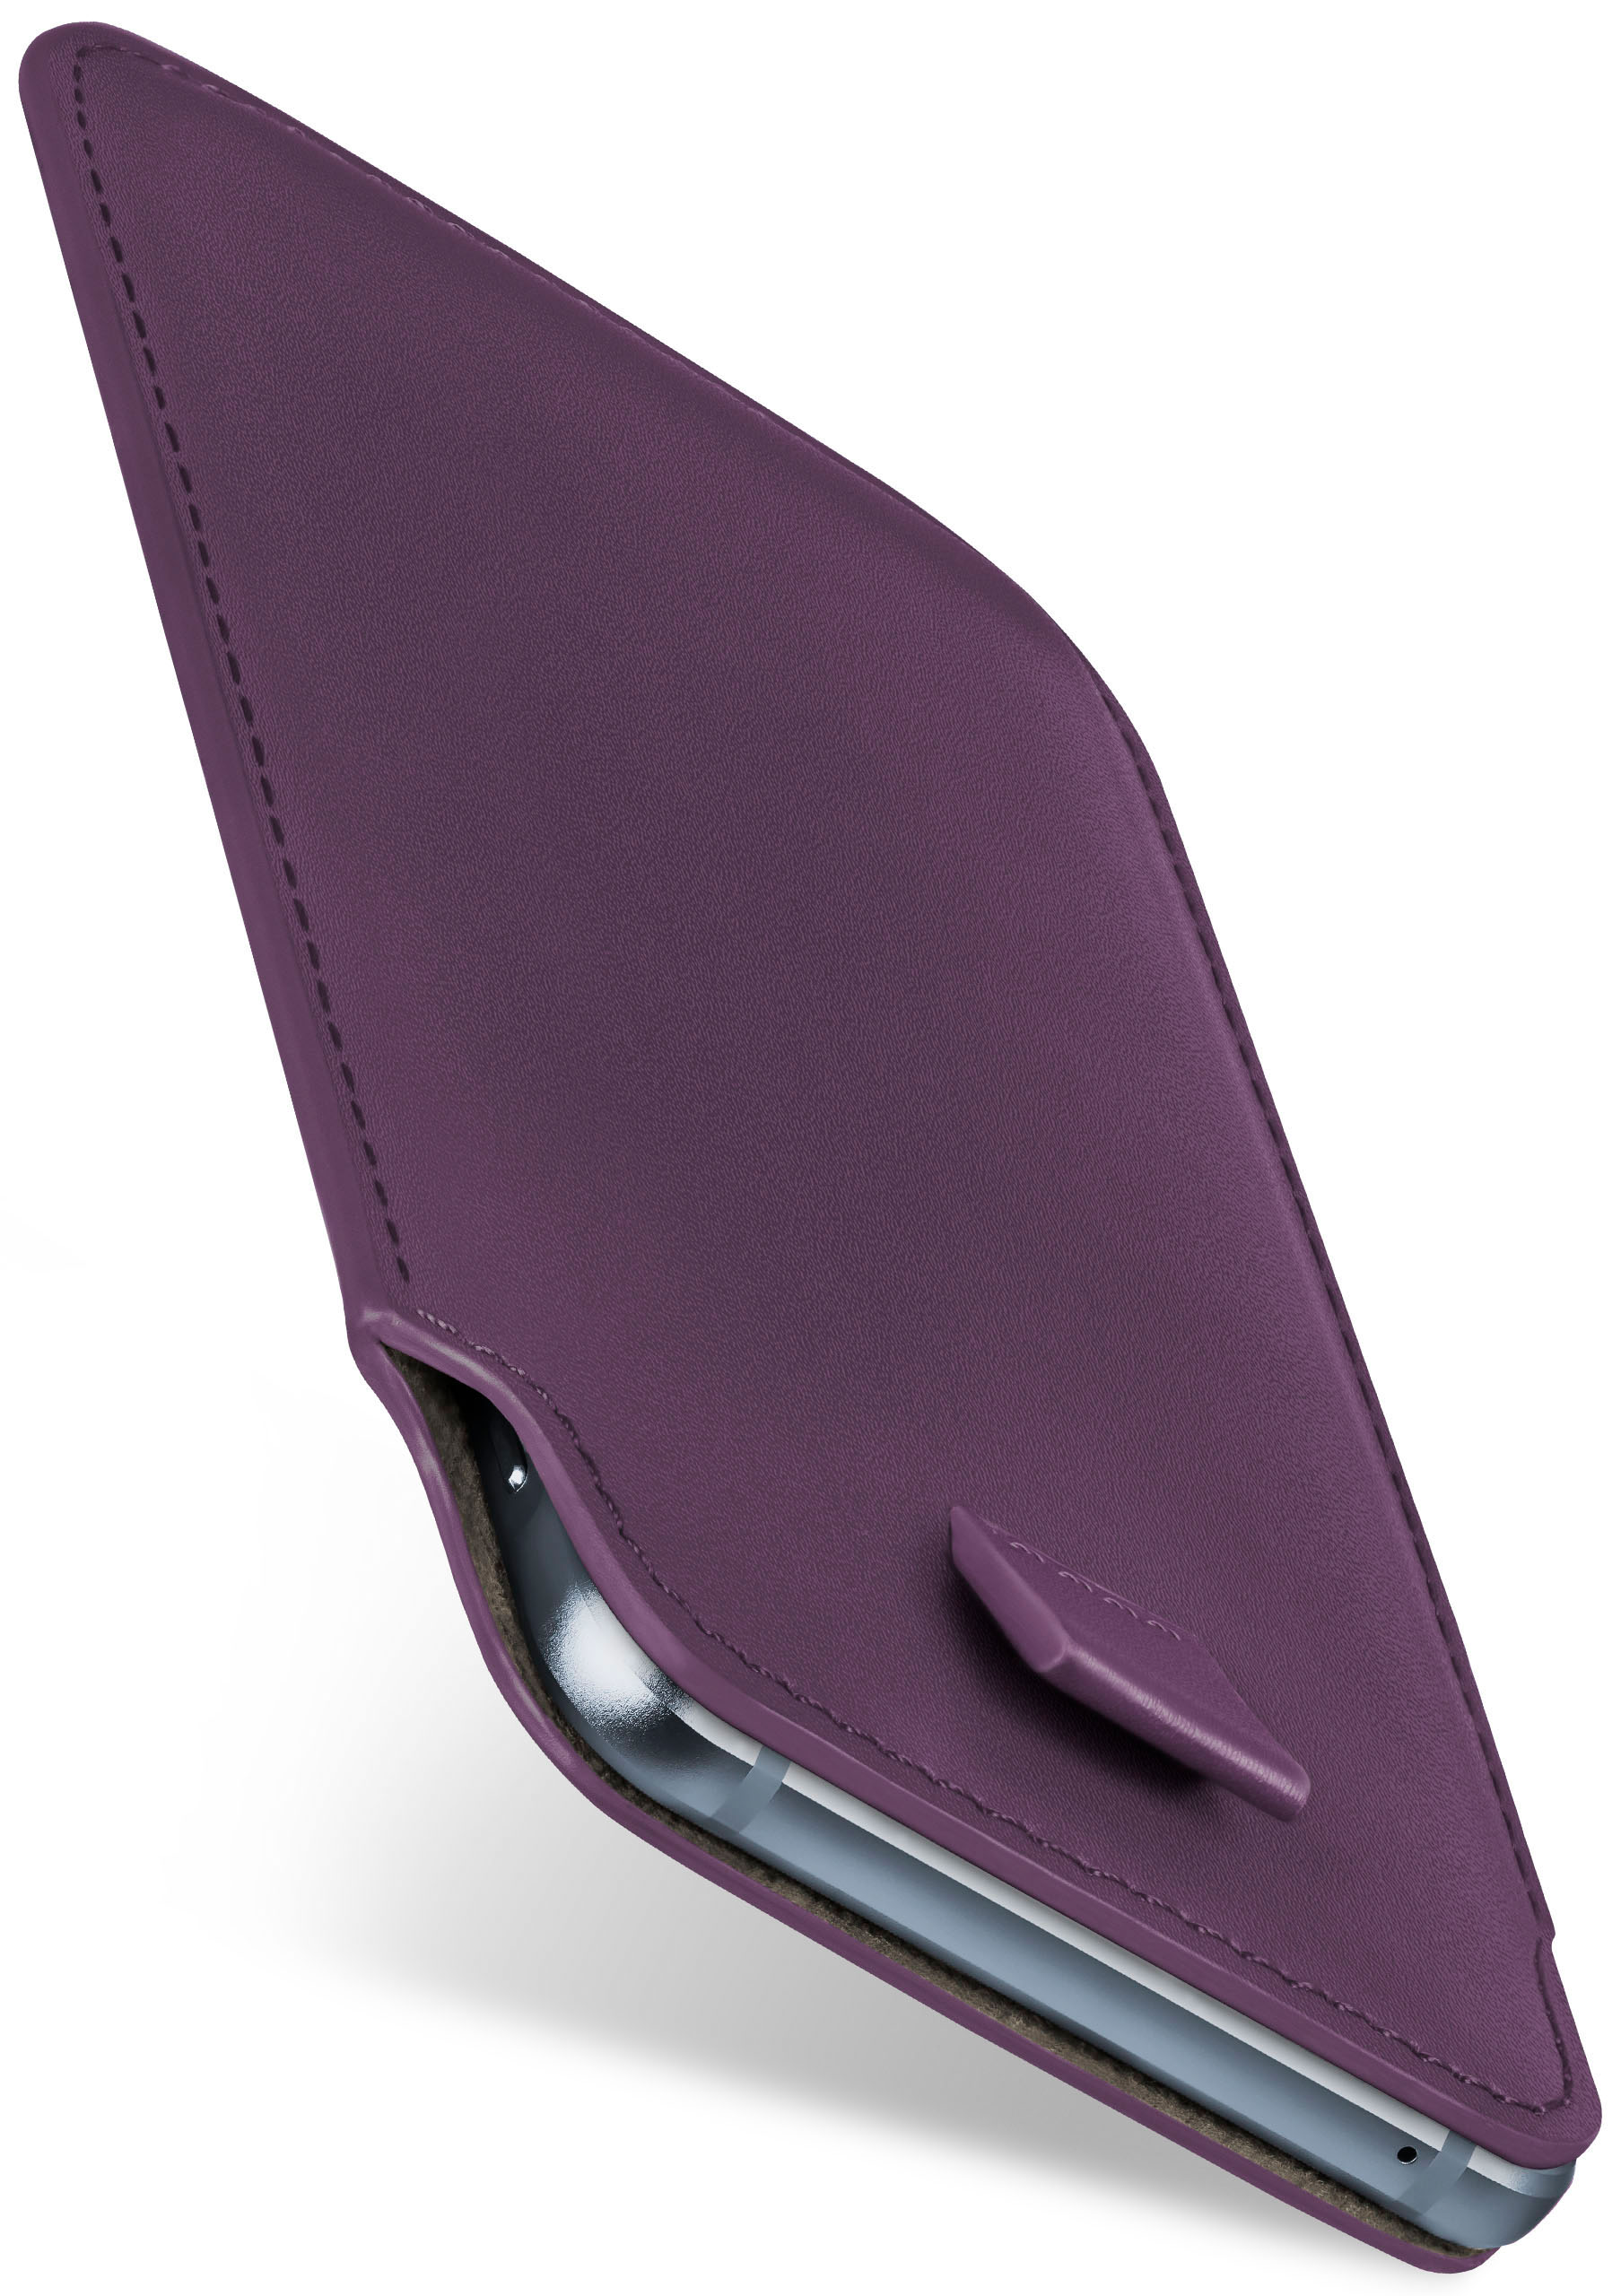 Case, Asus Slide Full MOEX Zenfone 3, ASUS, Cover, Indigo-Violet